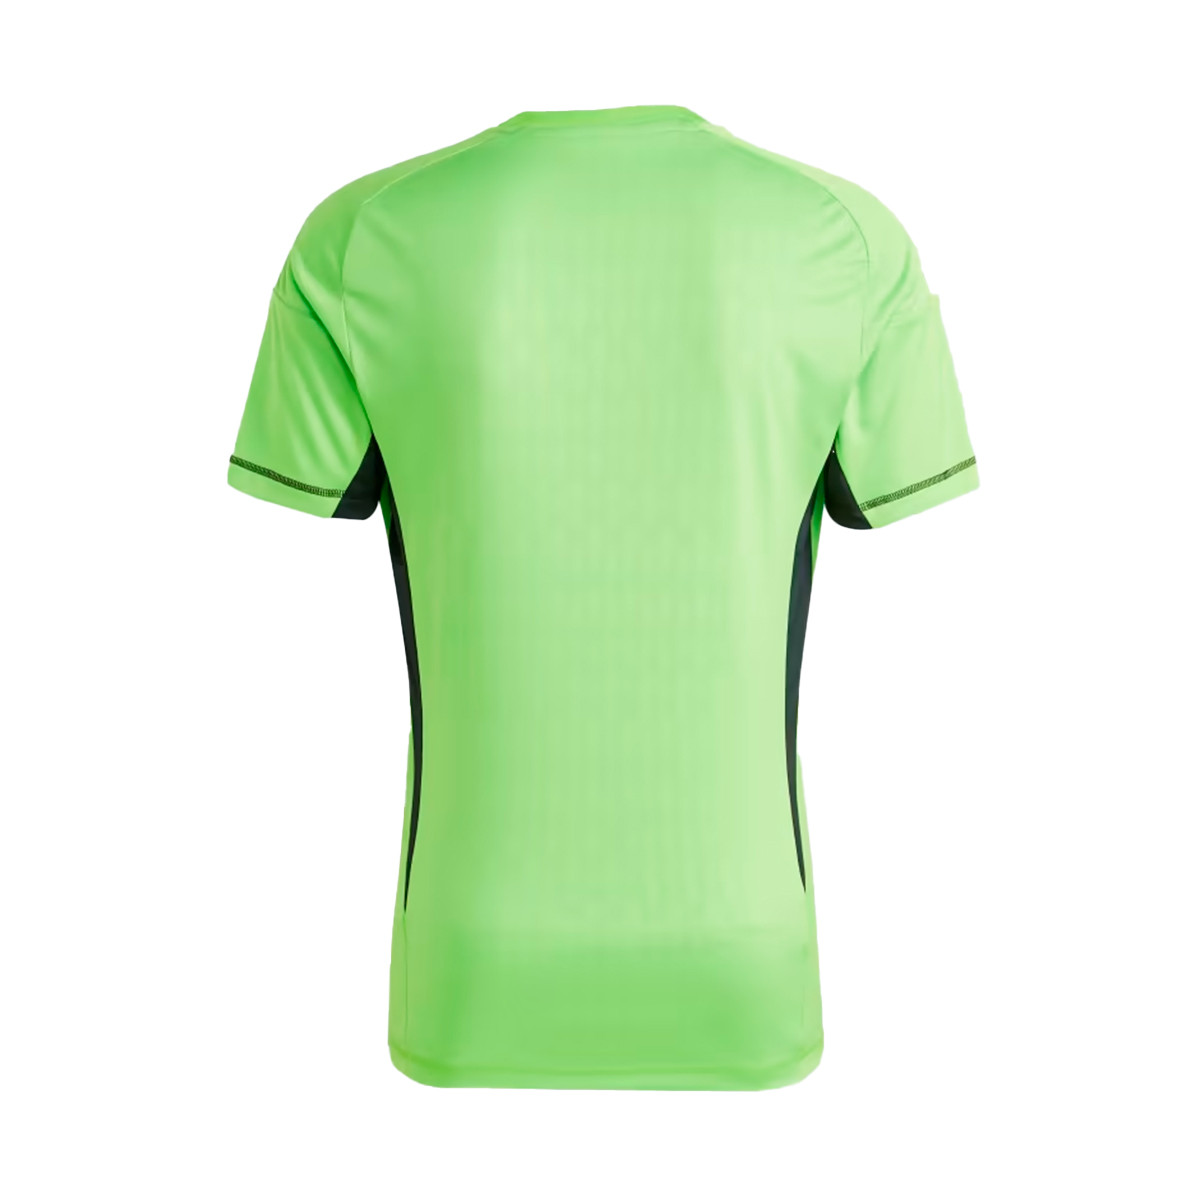 34 - Size 46- Soccer Style Jersey